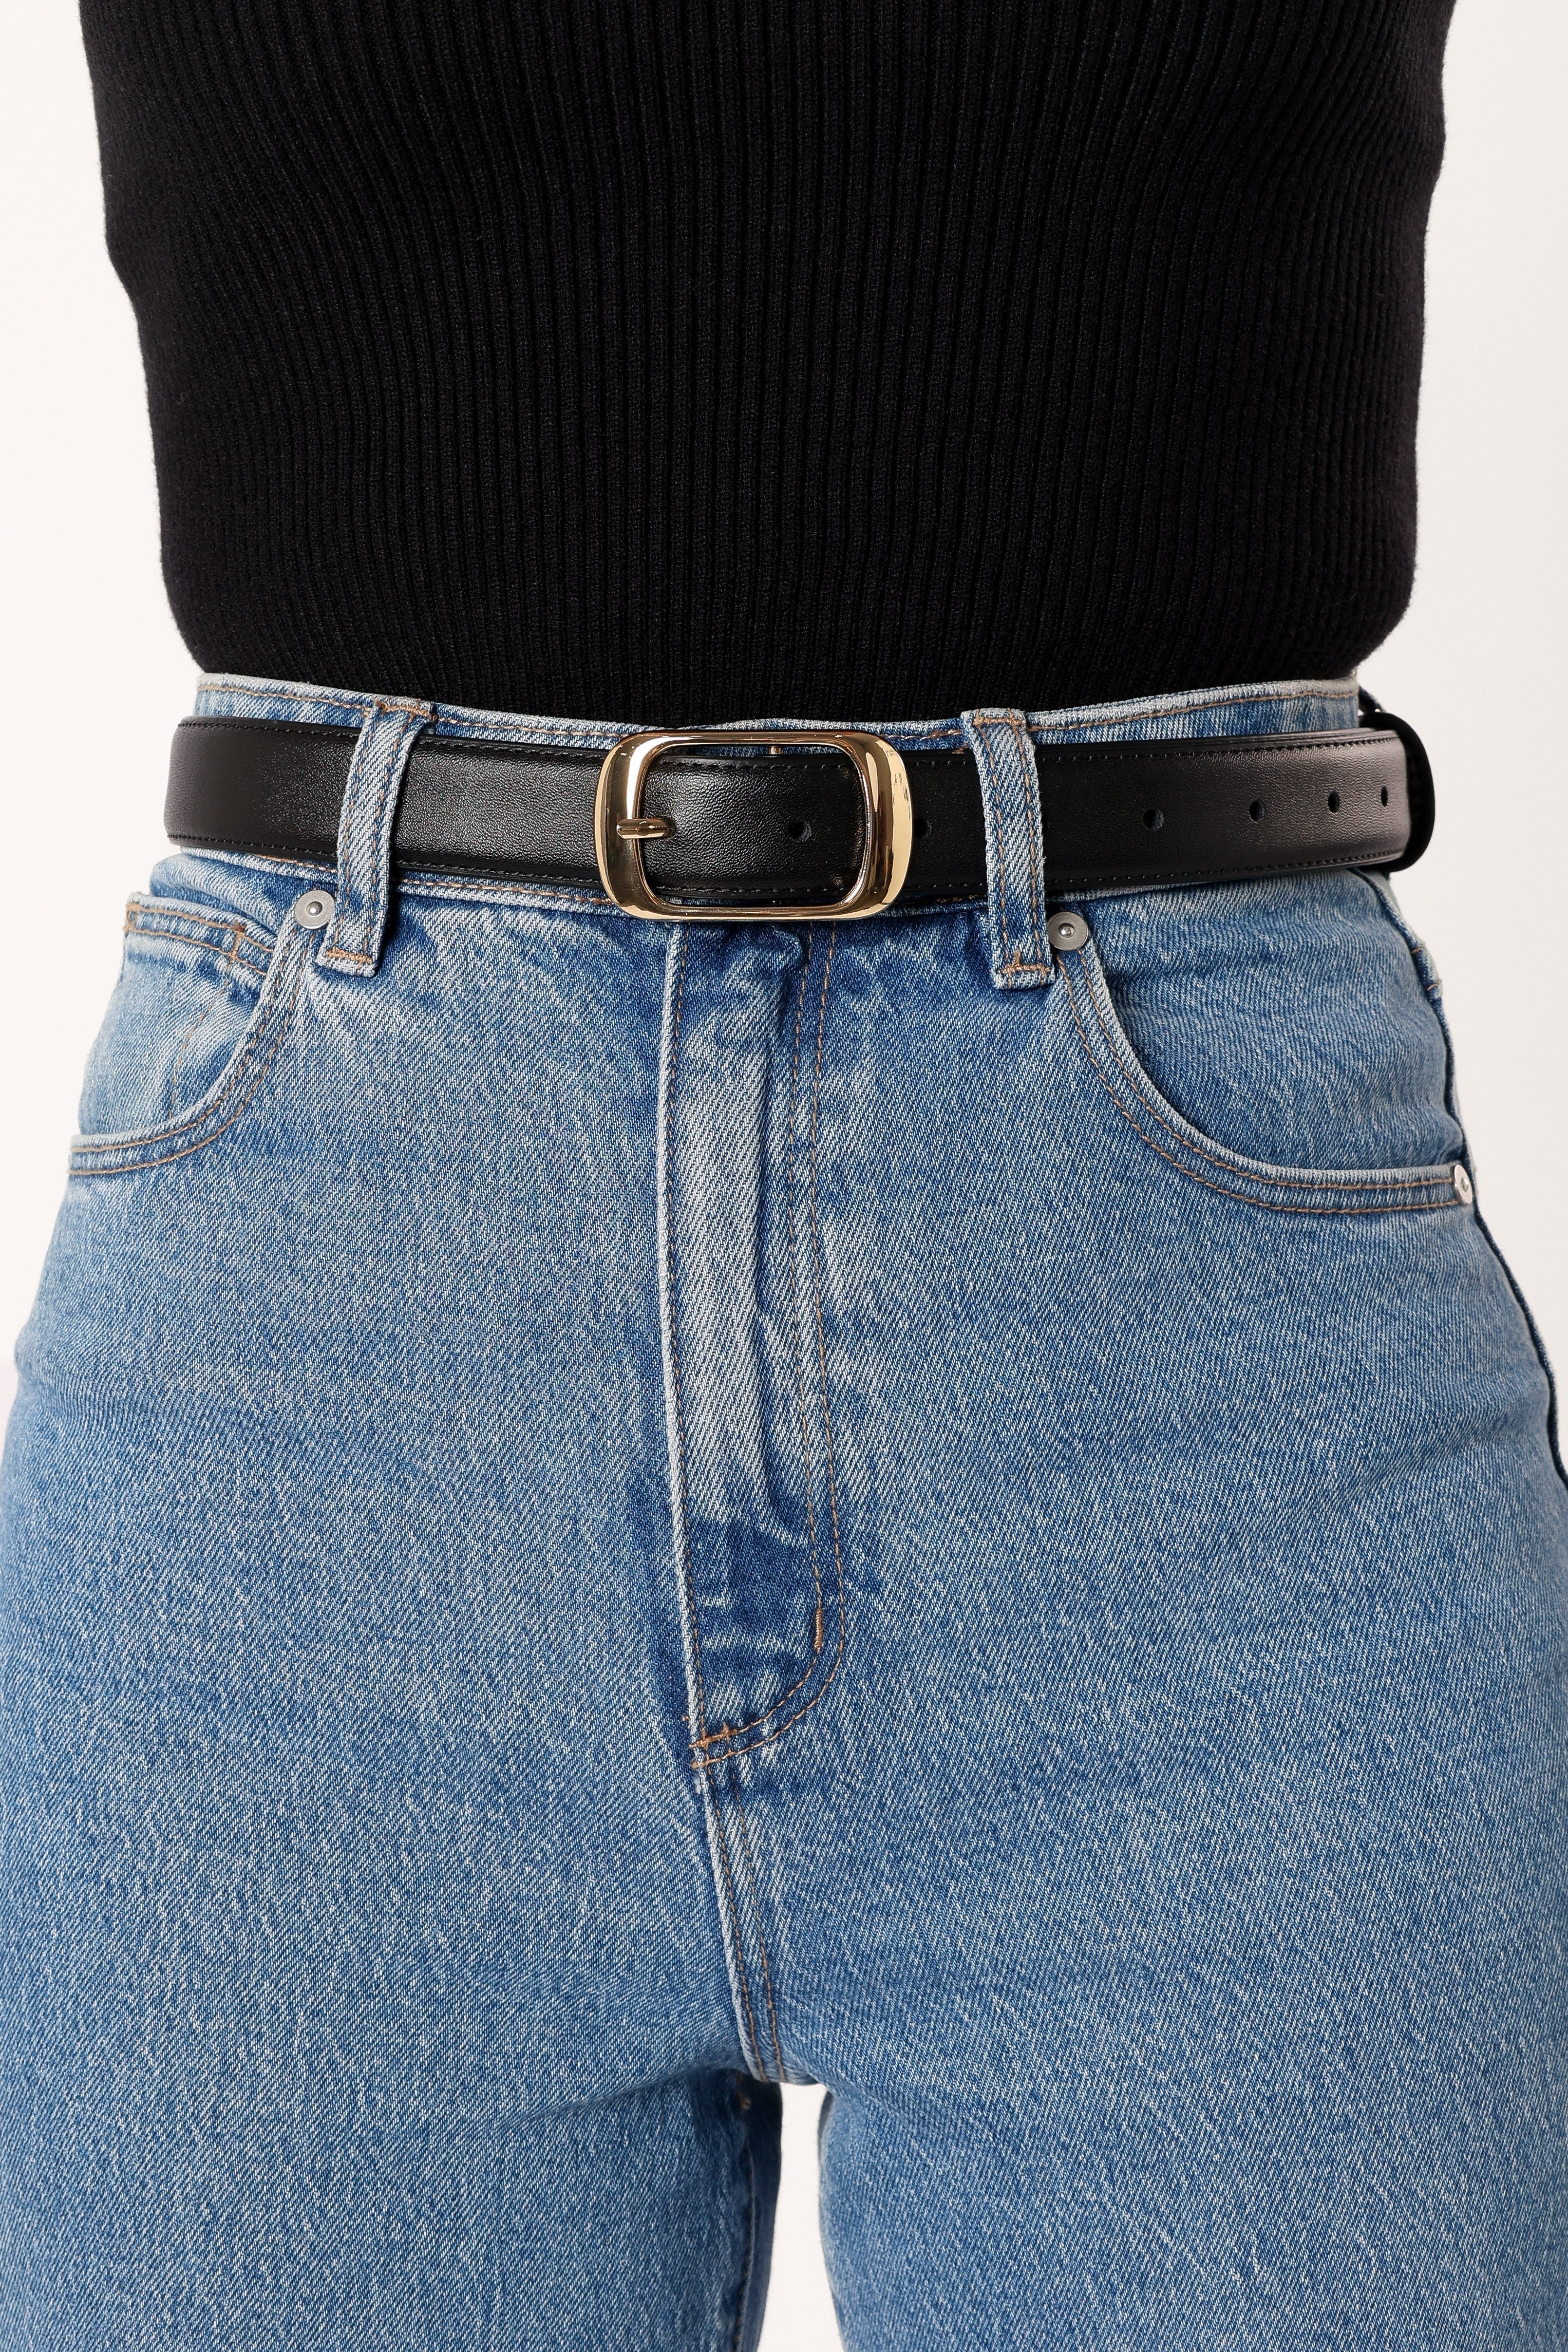 Georgette Black Leather Belt, Belts, Accessories